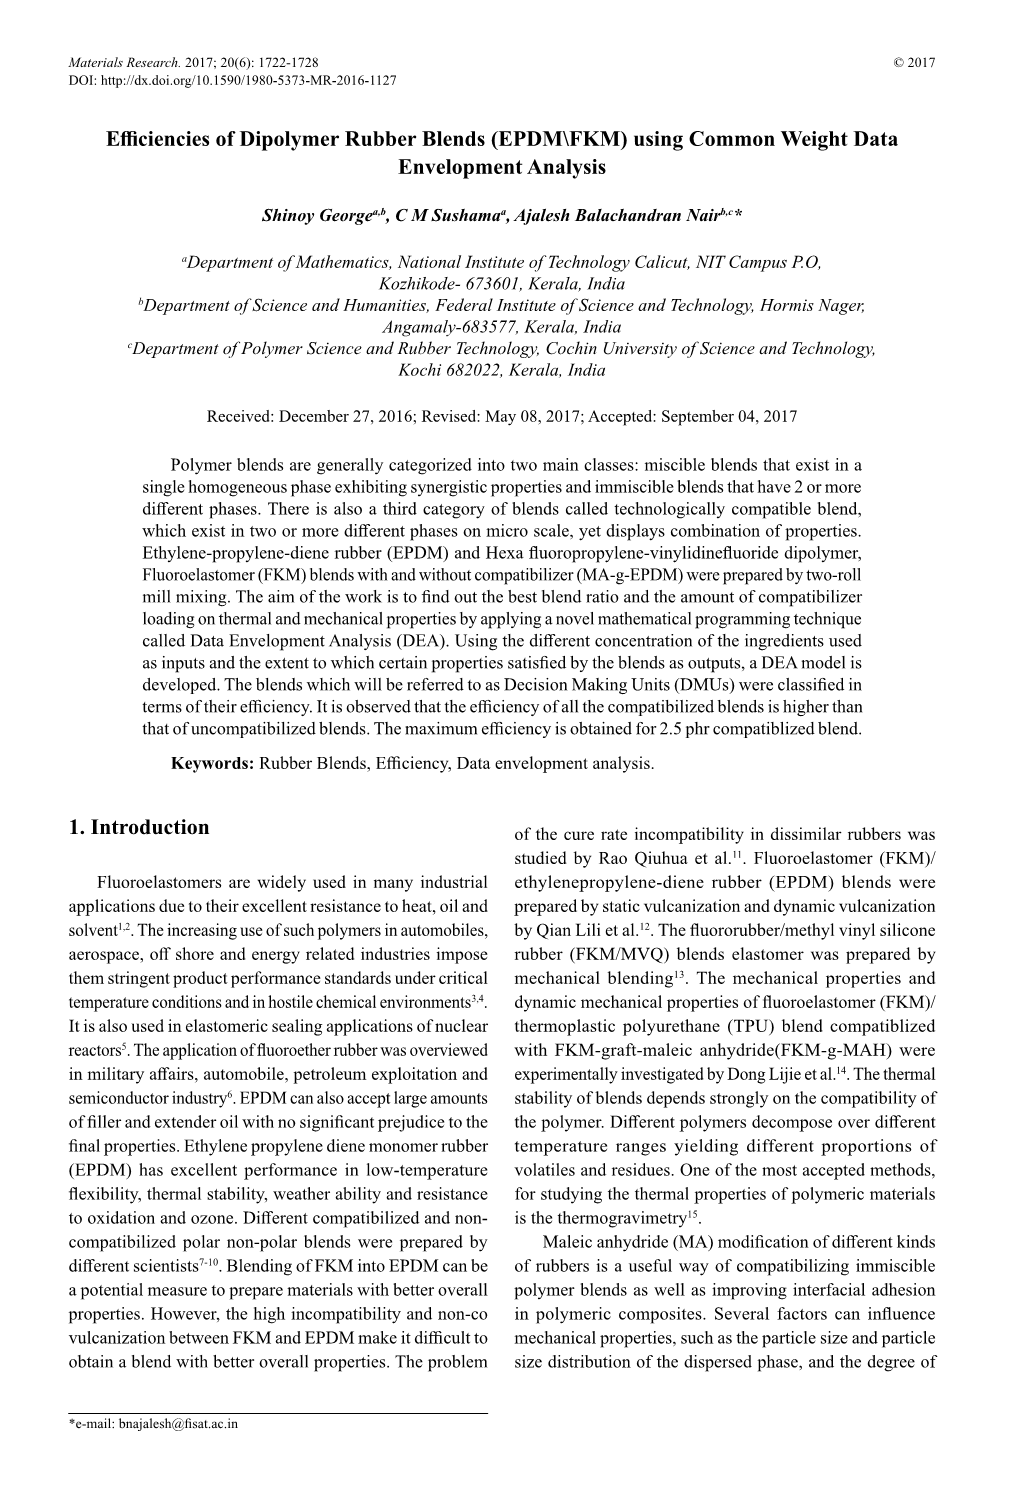 Efficiencies of Dipolymer Rubber Blends (EPDM\FKM) Using Common Weight Data Envelopment Analysis